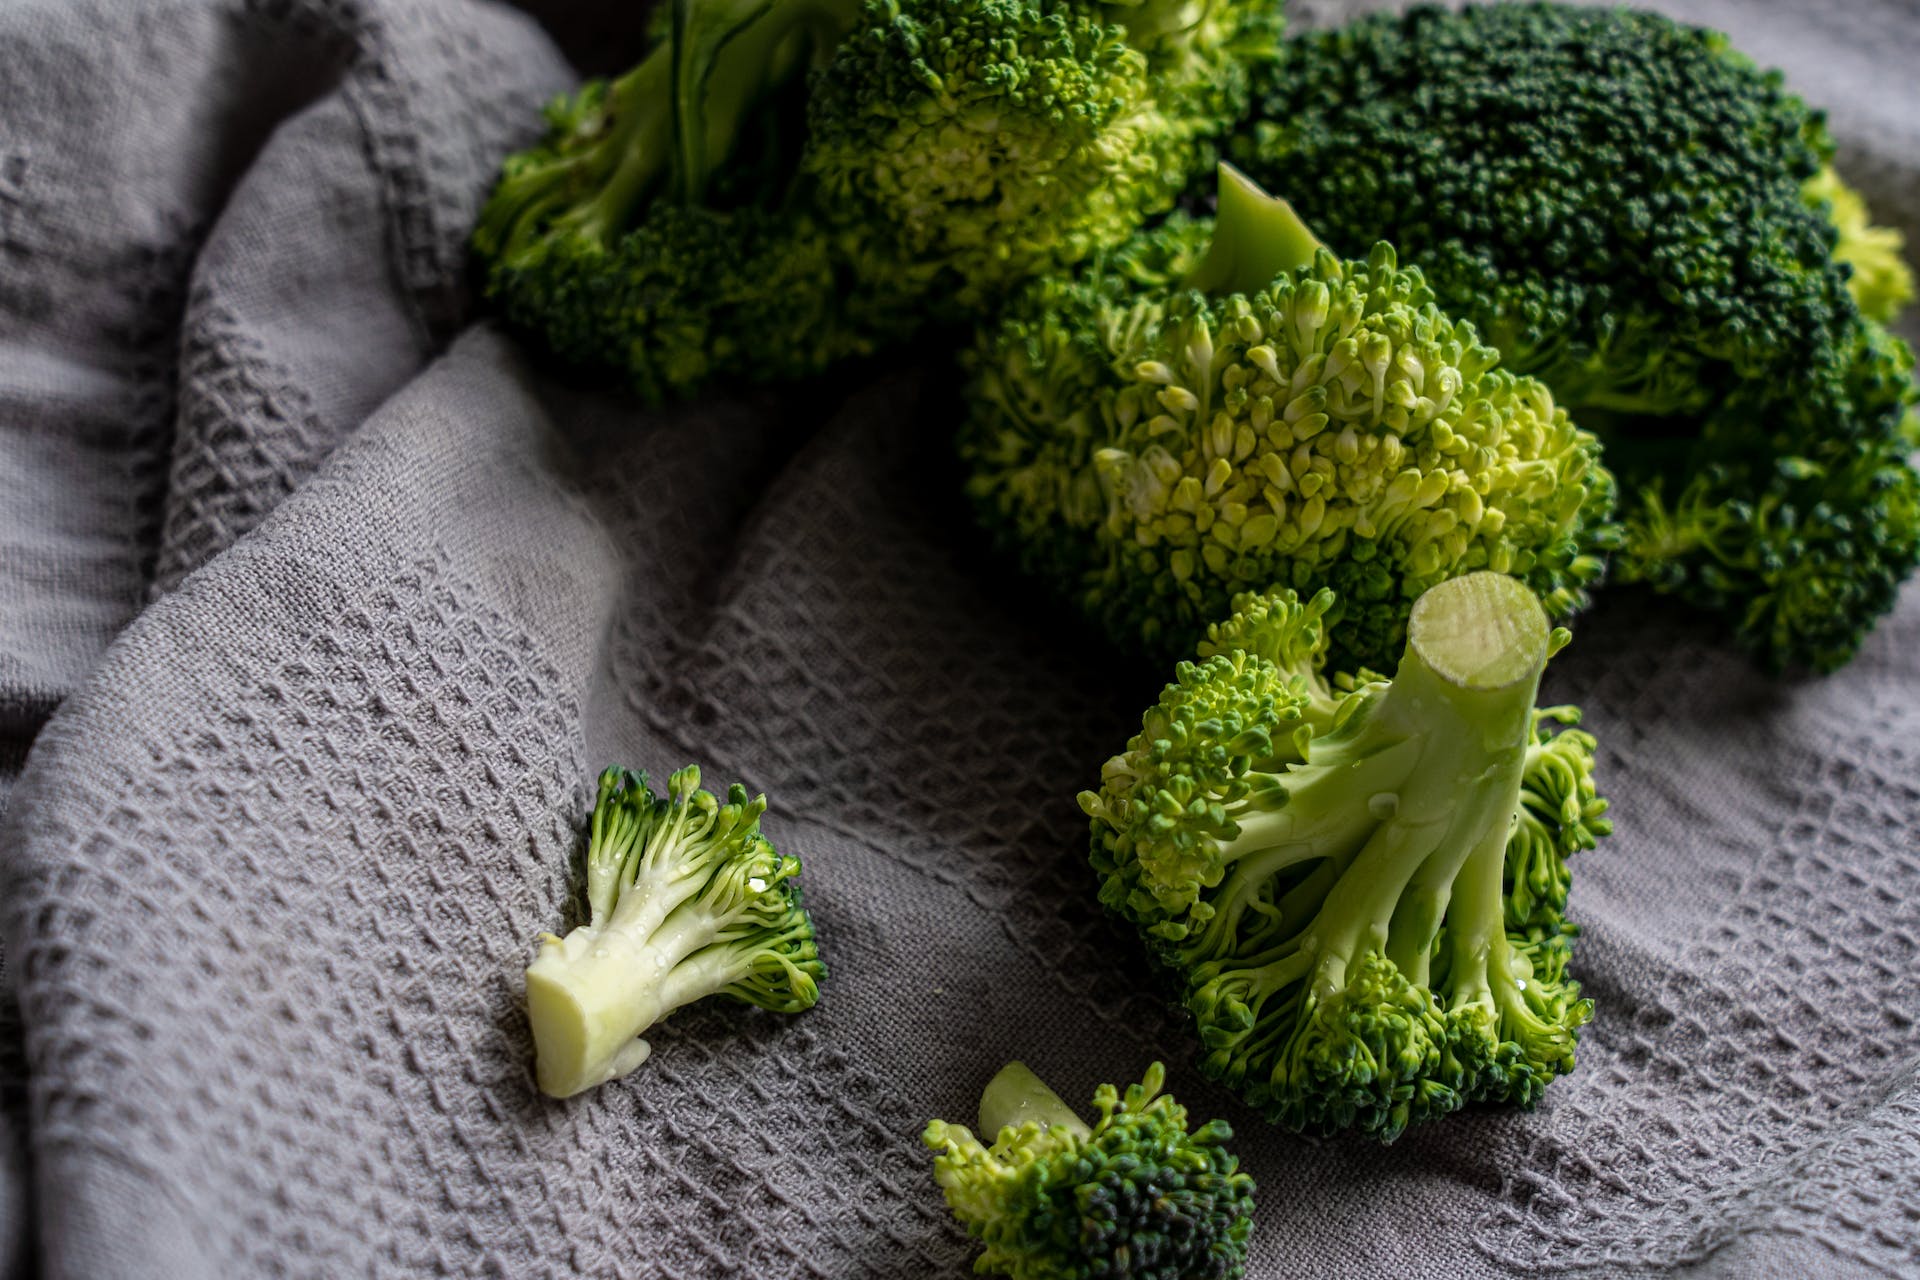 Broccoli on a gray towel | Source: Pexels